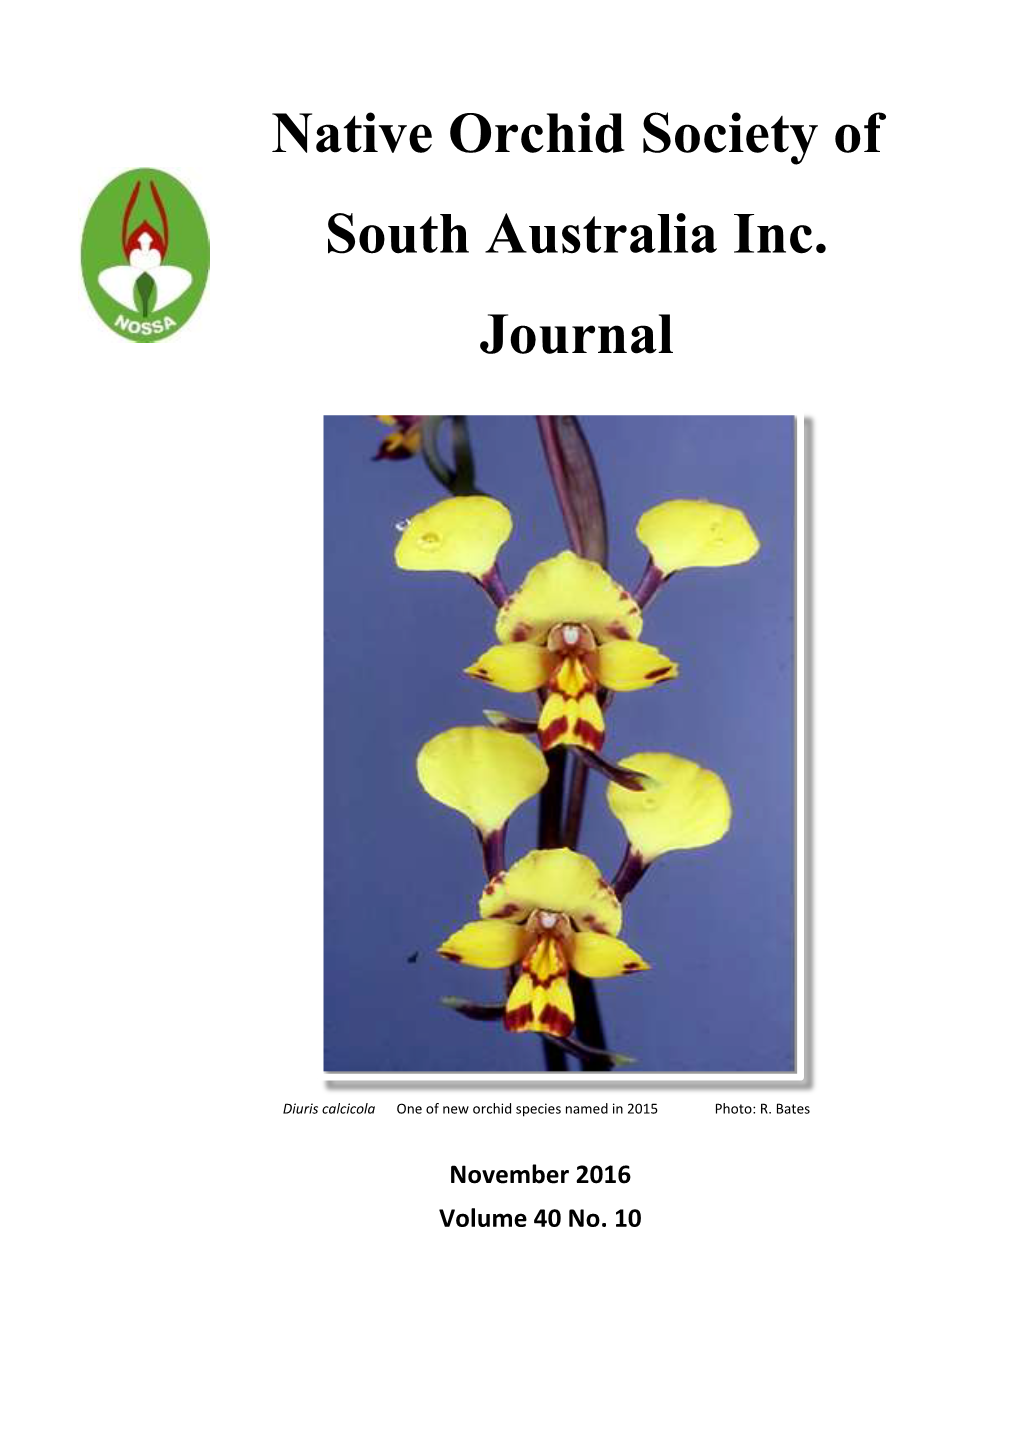 Native Orchid Society of South Australia Journal November 2016